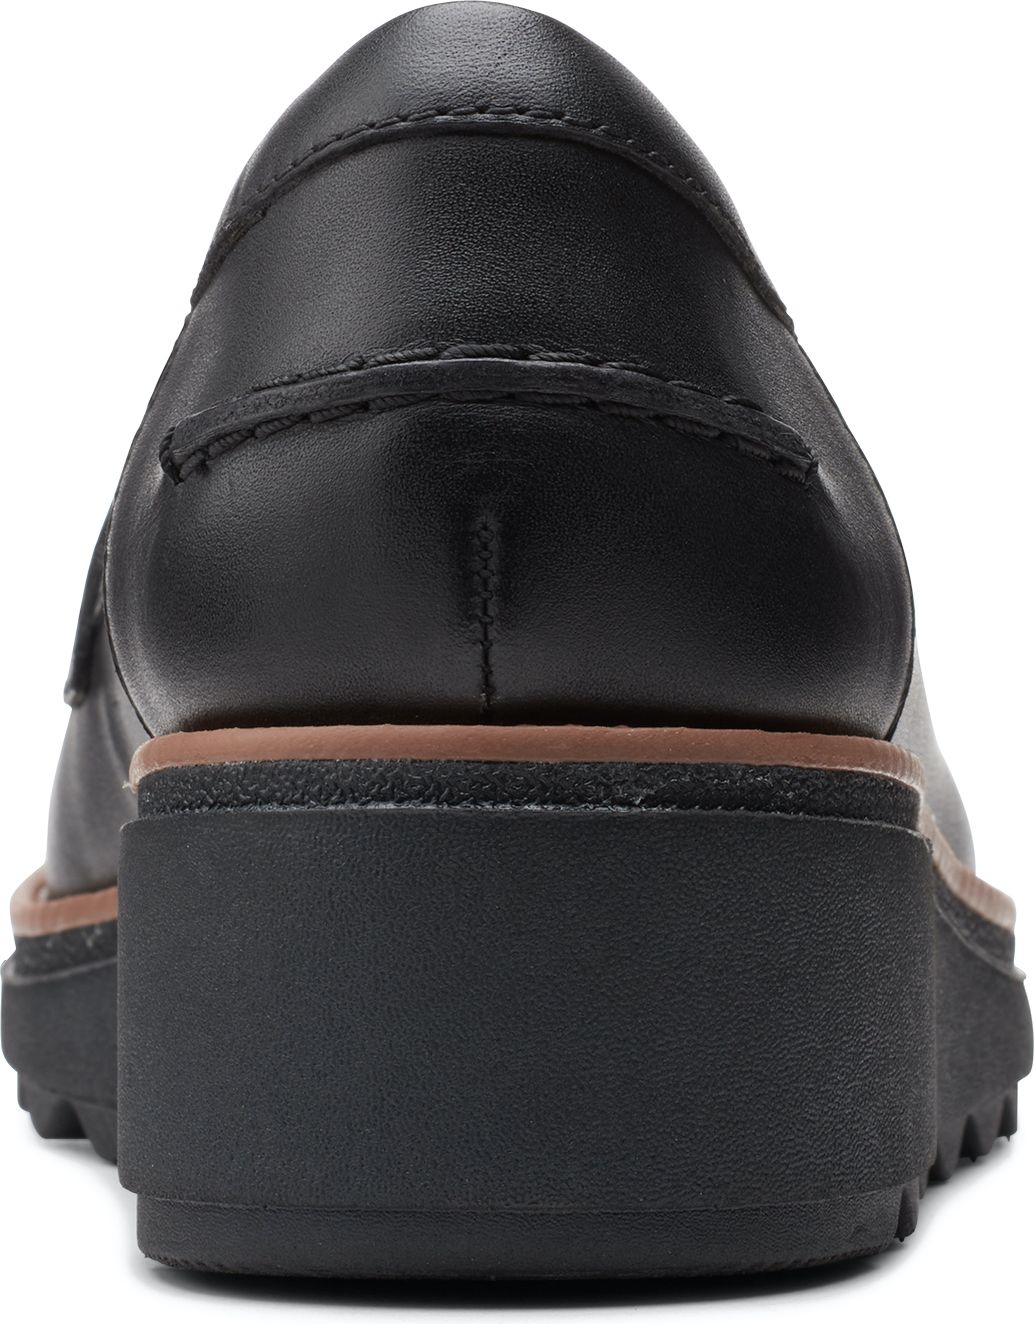 Clarks Shoes Sharon Gracie Black Leather